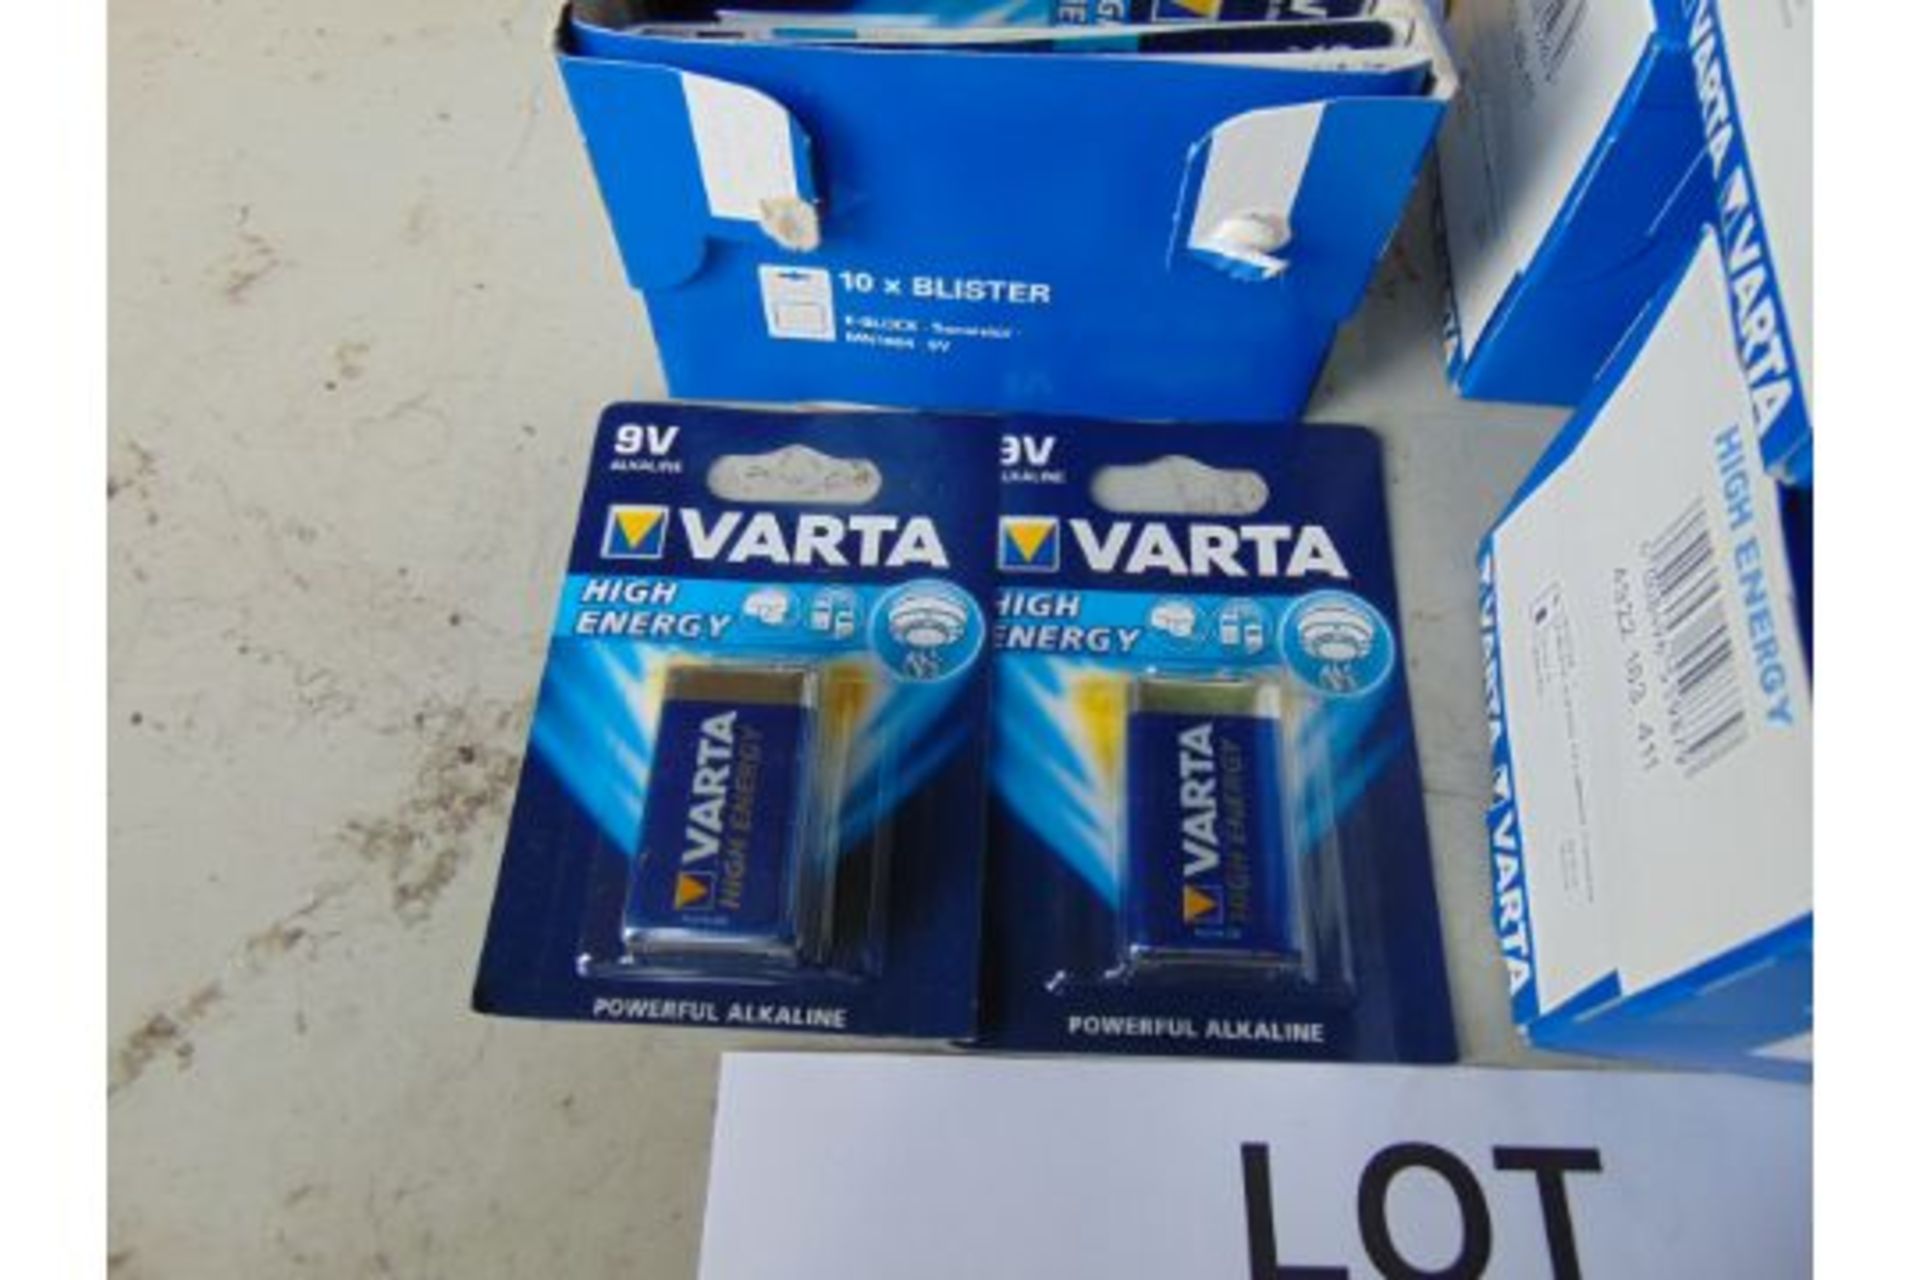 40 Varta 9 Volt Batteries - Image 4 of 5